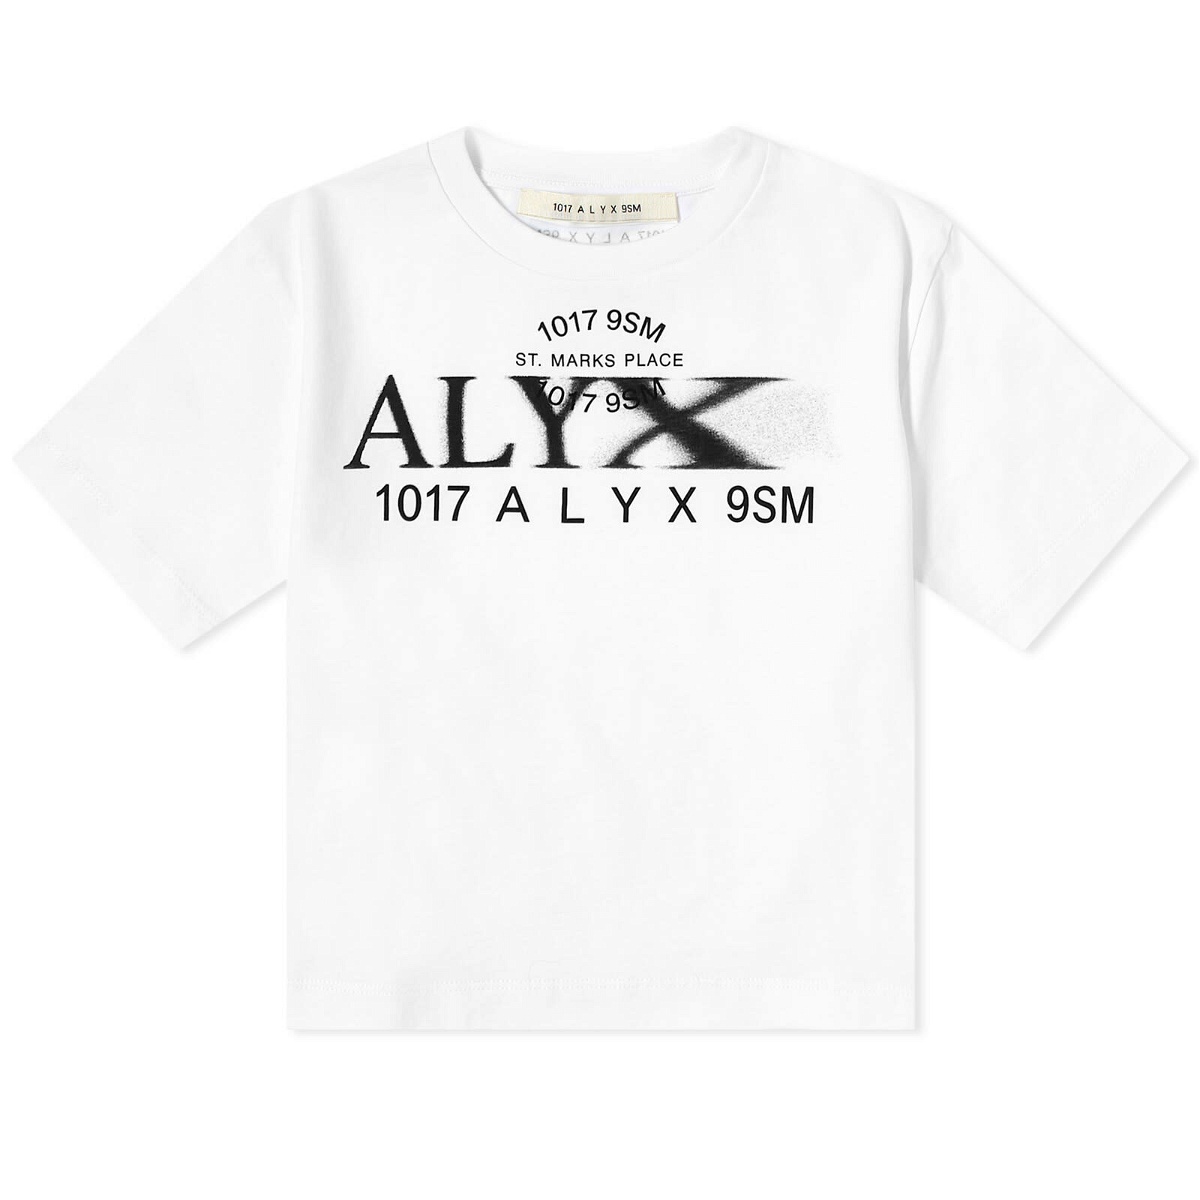 Alyx Black Ribbed T-Shirt 1017 ALYX 9SM